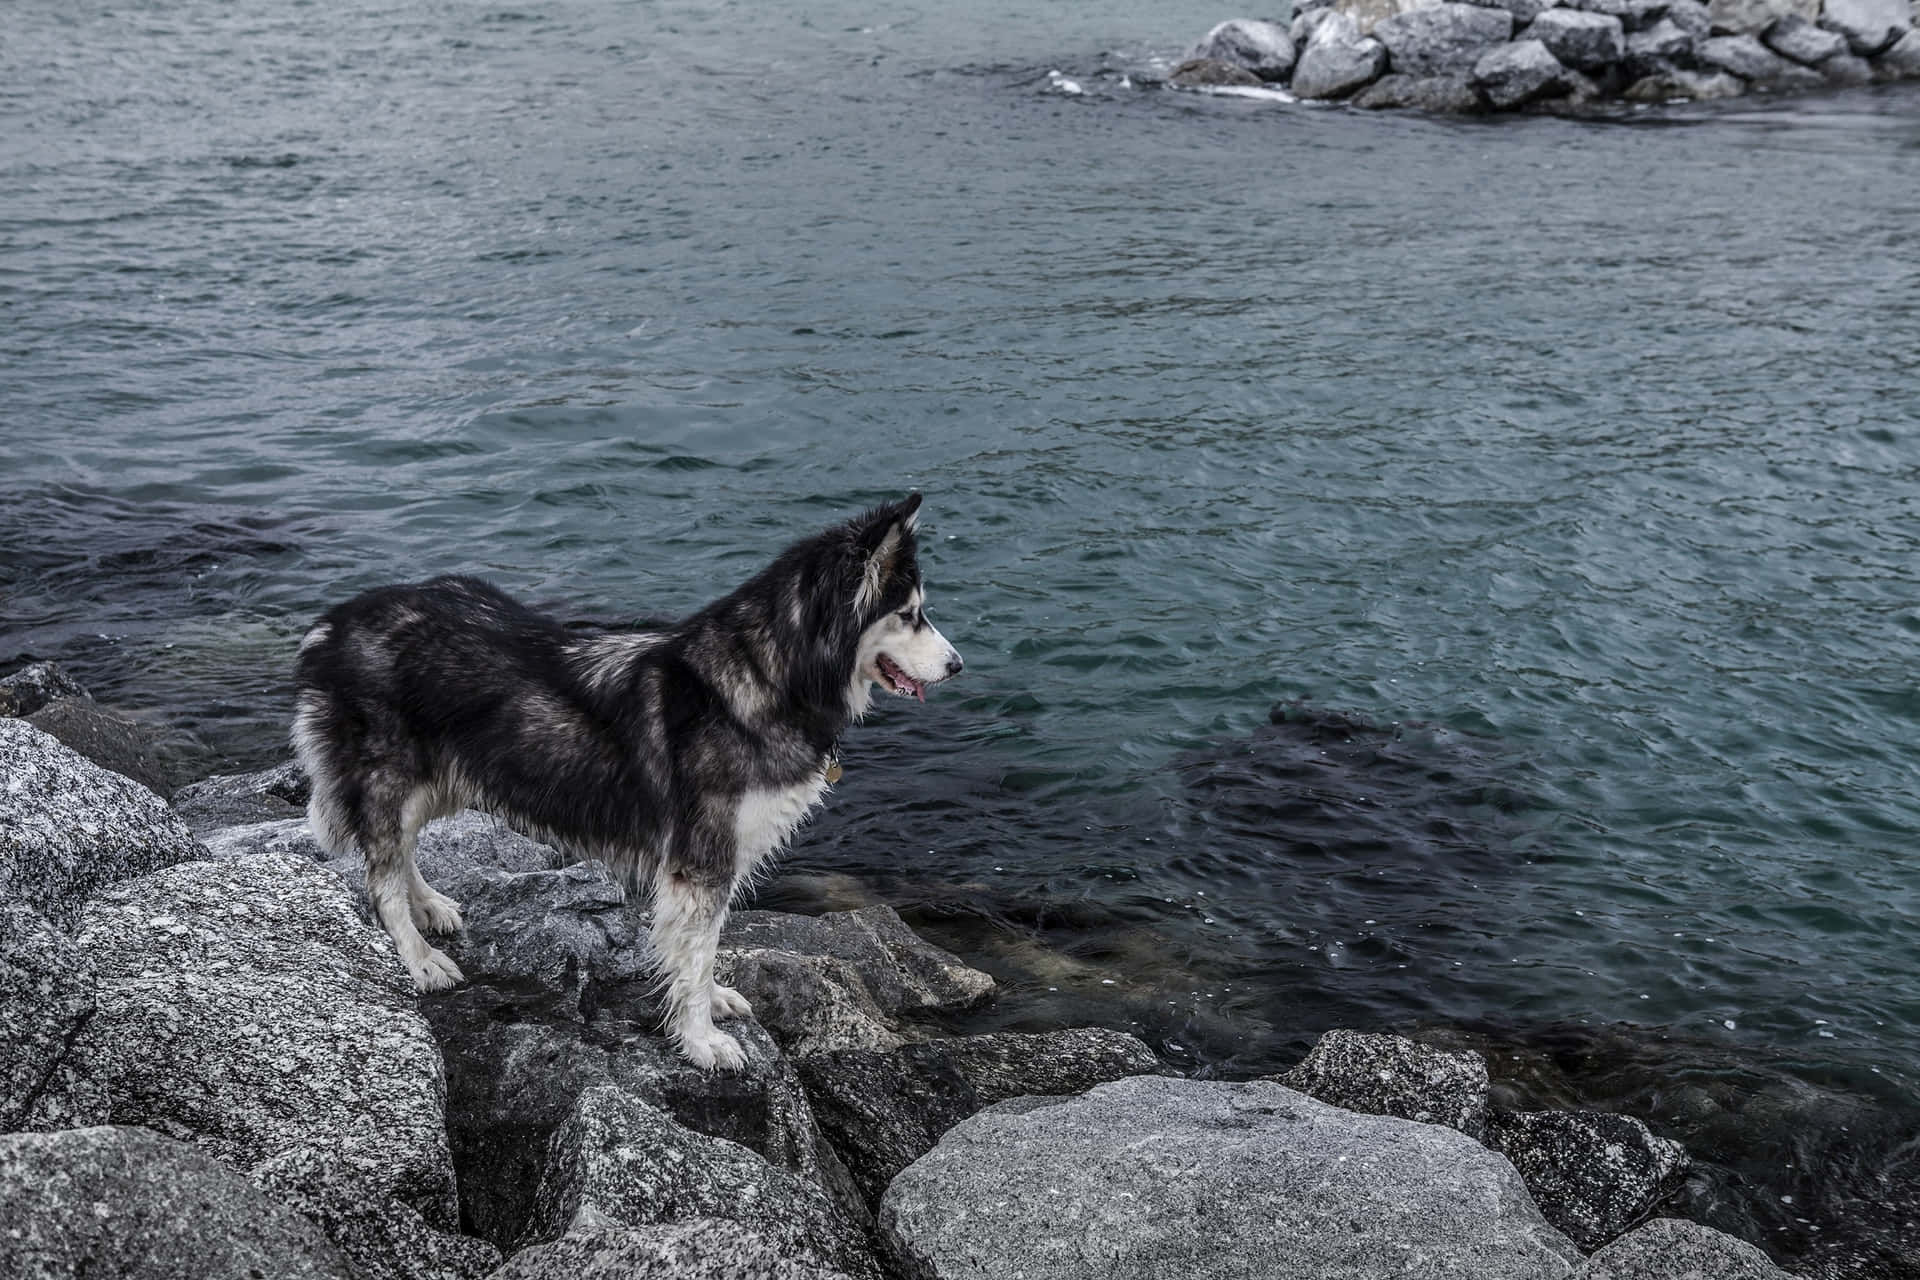 Imagende Un Feroz Perro Siberian Husky En El Mar